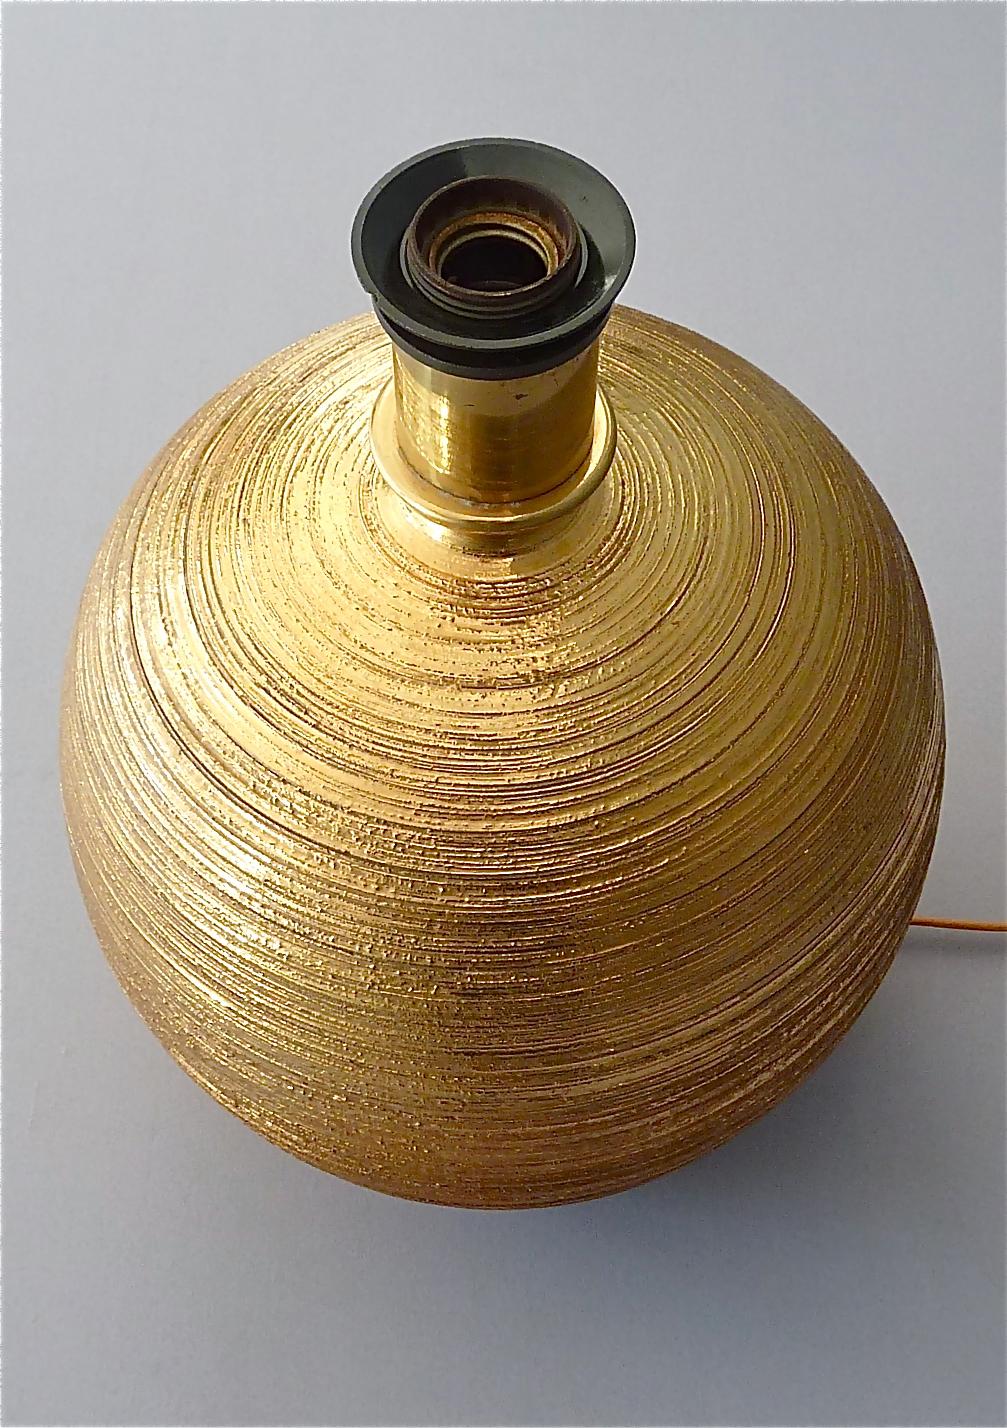 Large Rare Italian Gold Ceramic Bitossi Table Lamp for Bergboms 1950s Sweden  For Sale 3